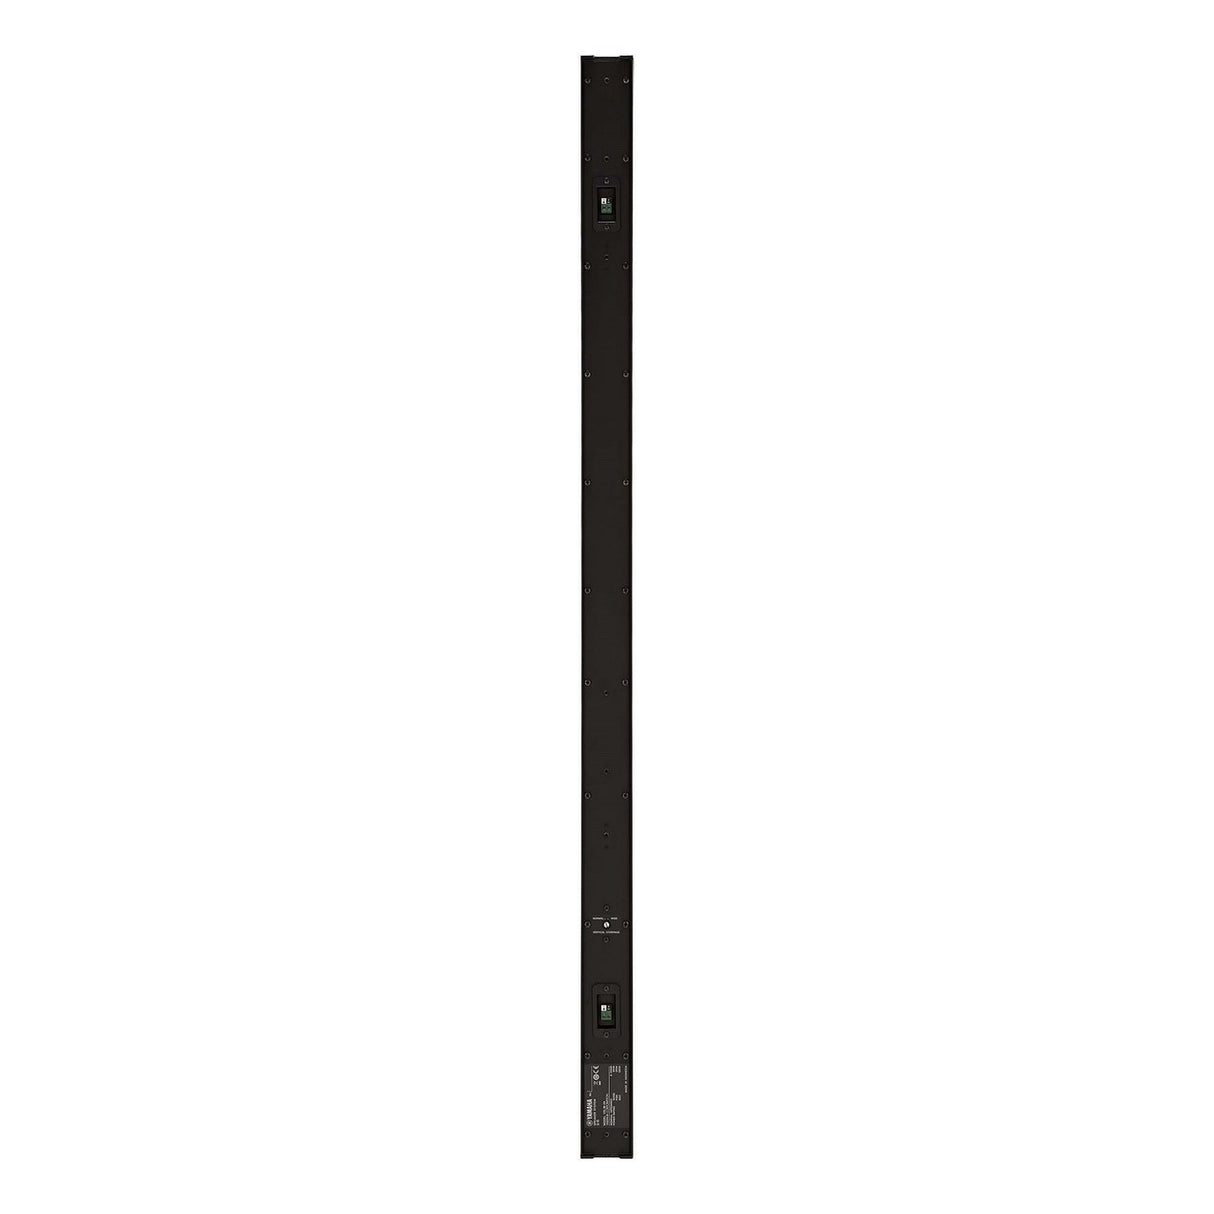 Yamaha VXL1B-8 | Slim Line Array Speaker System with 8 x 1.5 Inch Drivers Black